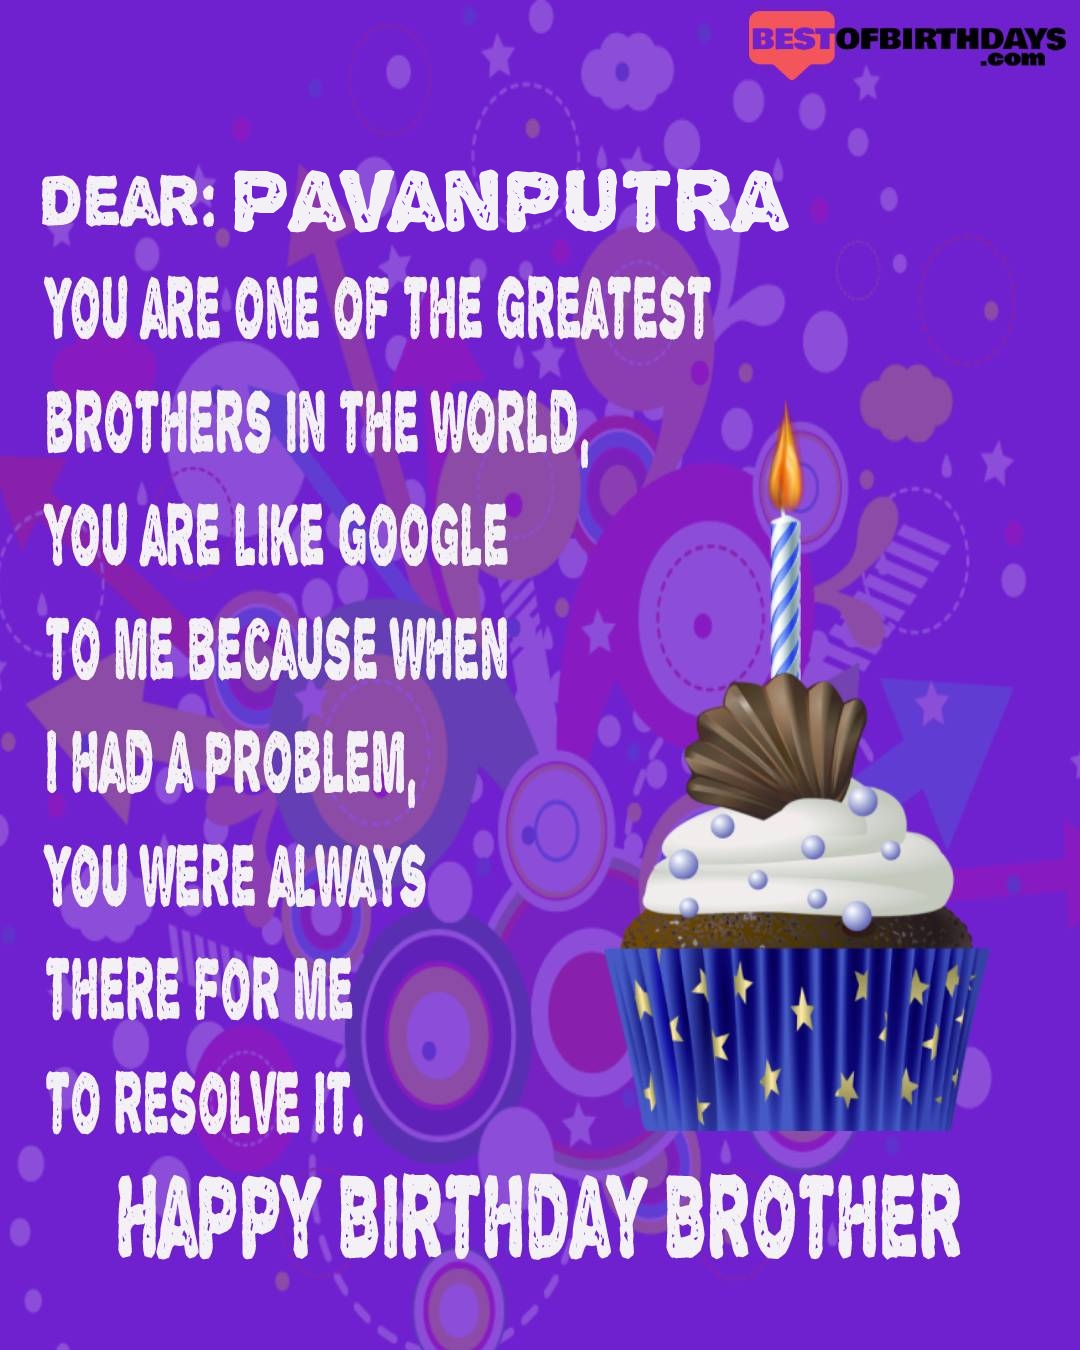 Happy birthday pavanputra bhai brother bro